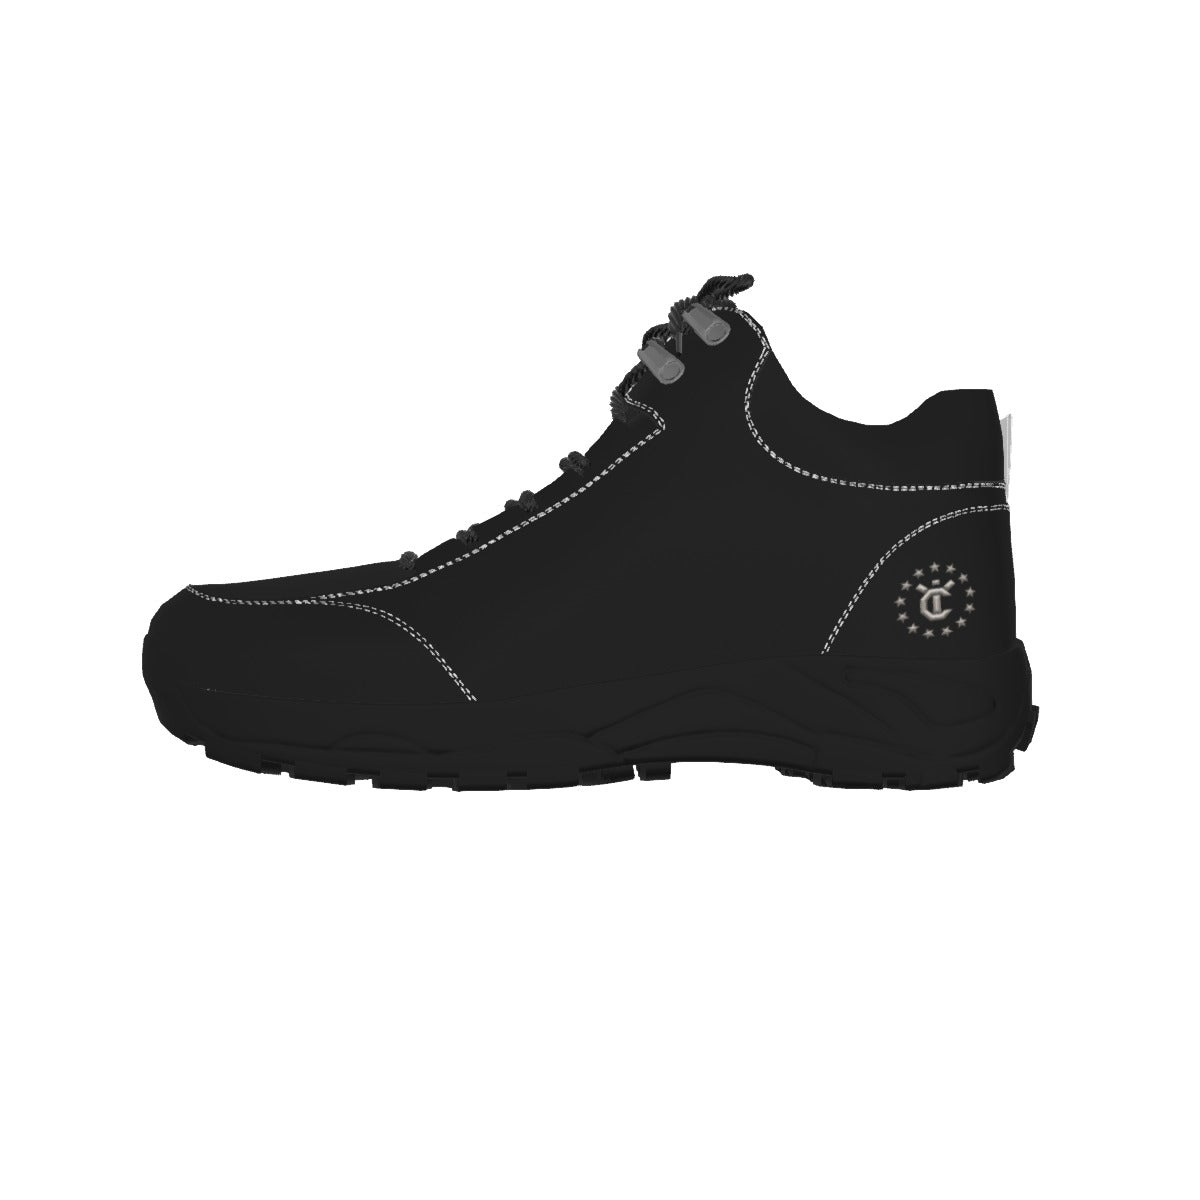 YIC Men's Hiking Boots - Vantablack